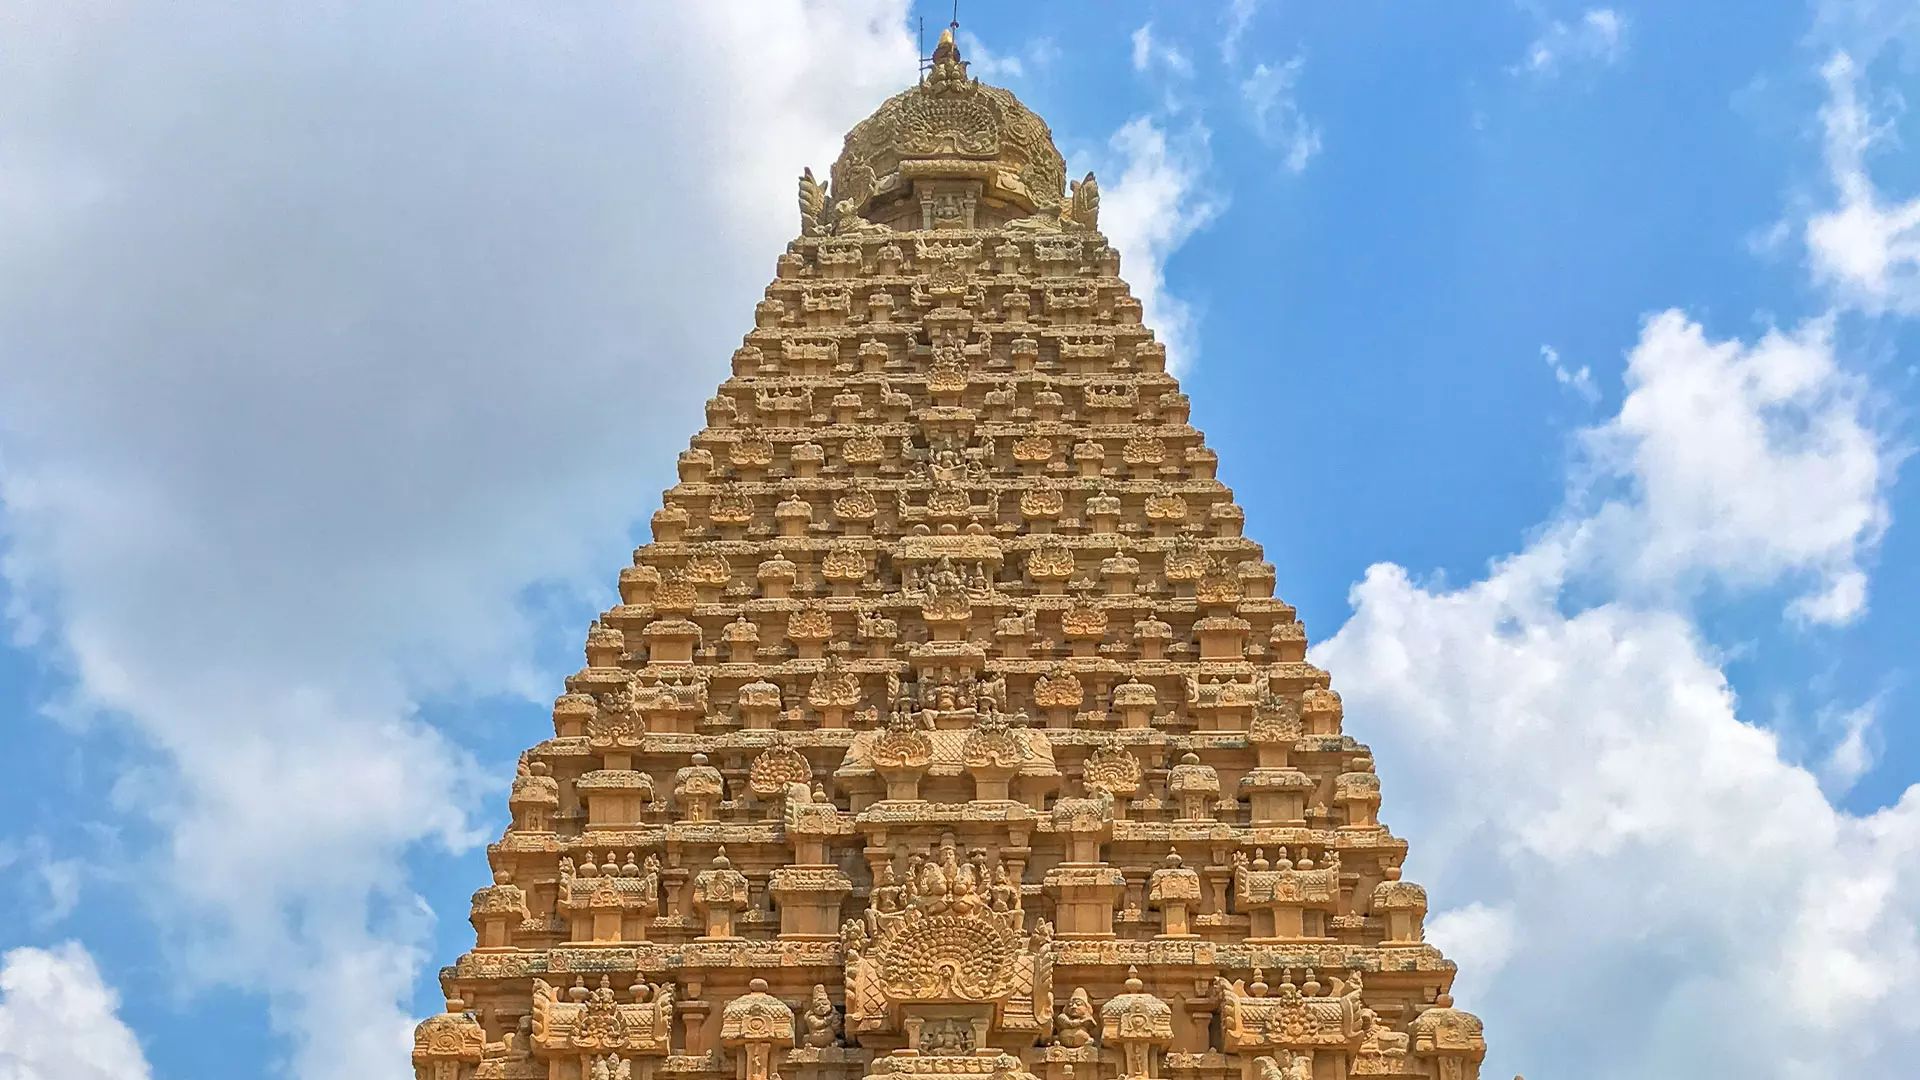 Rajarajeshwara Temple tower